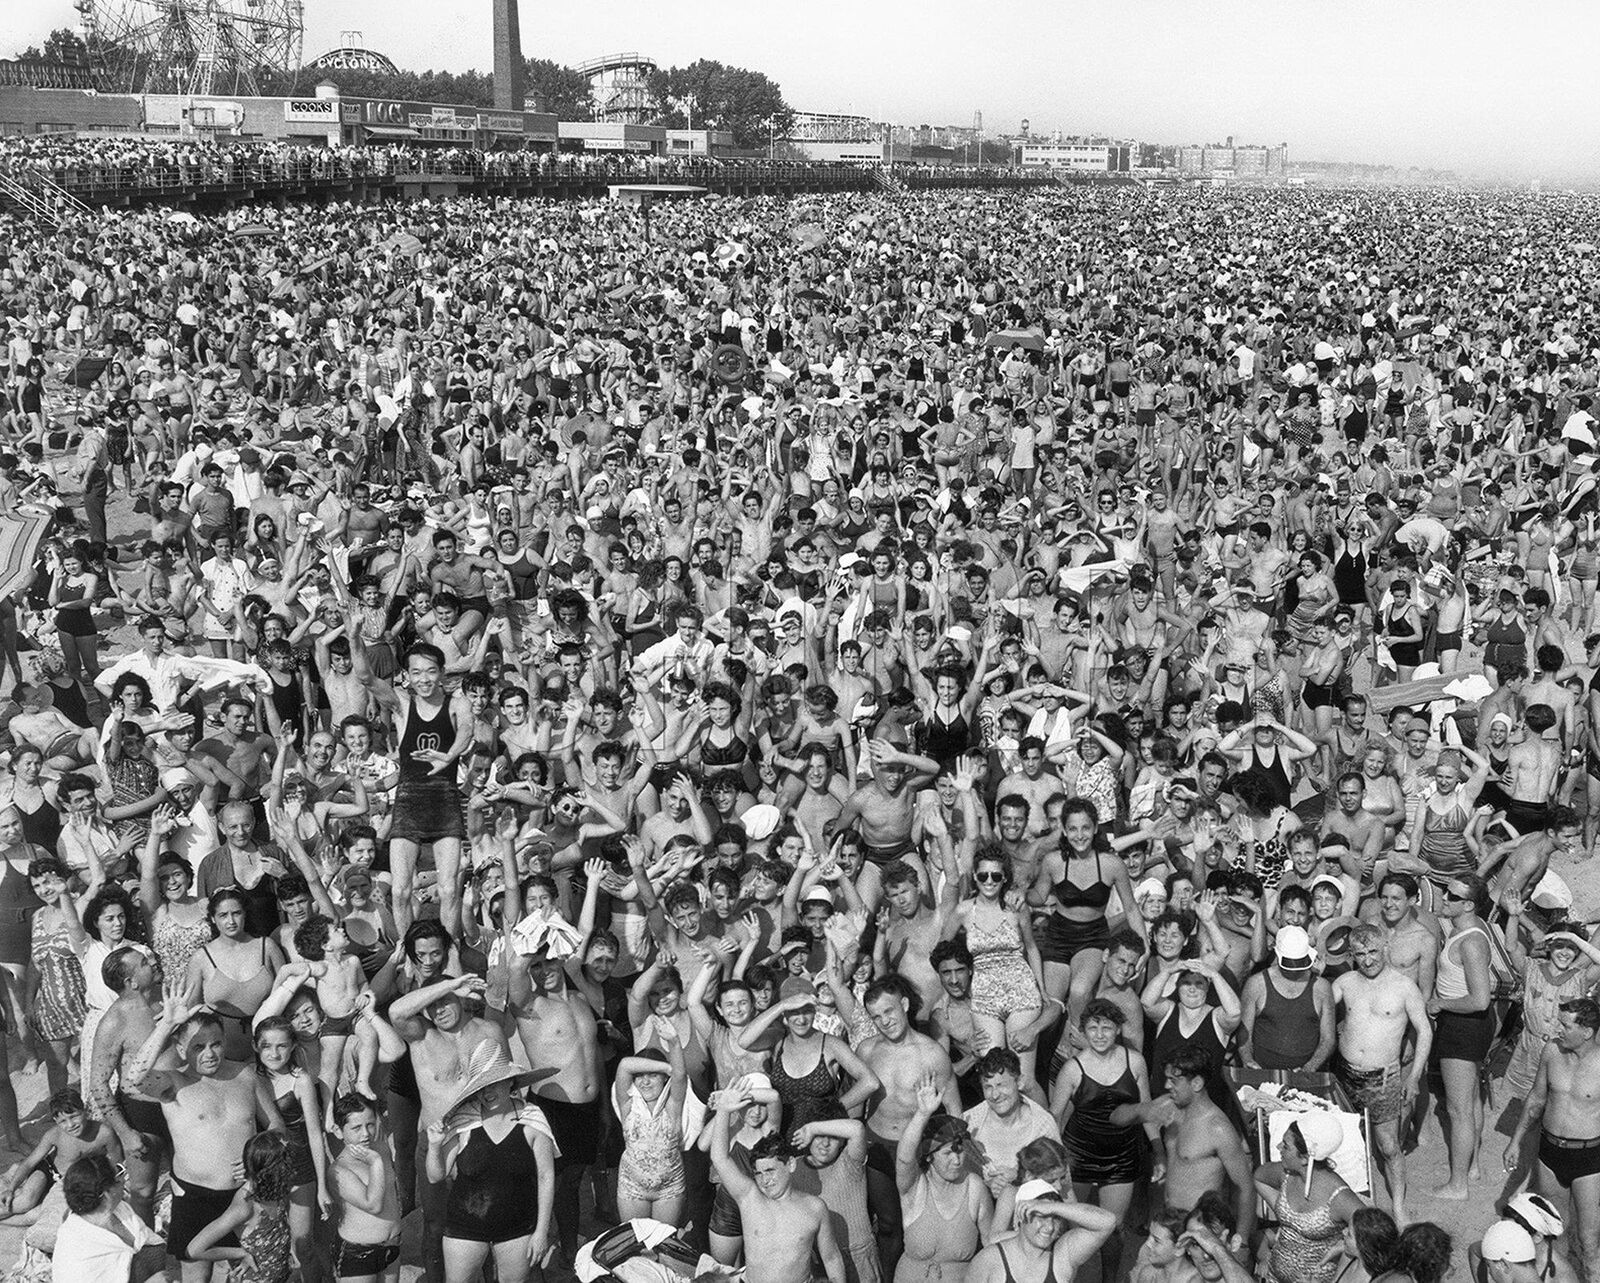 1940 CONEY ISLAND BEACH CROWD Photo  (219-N)